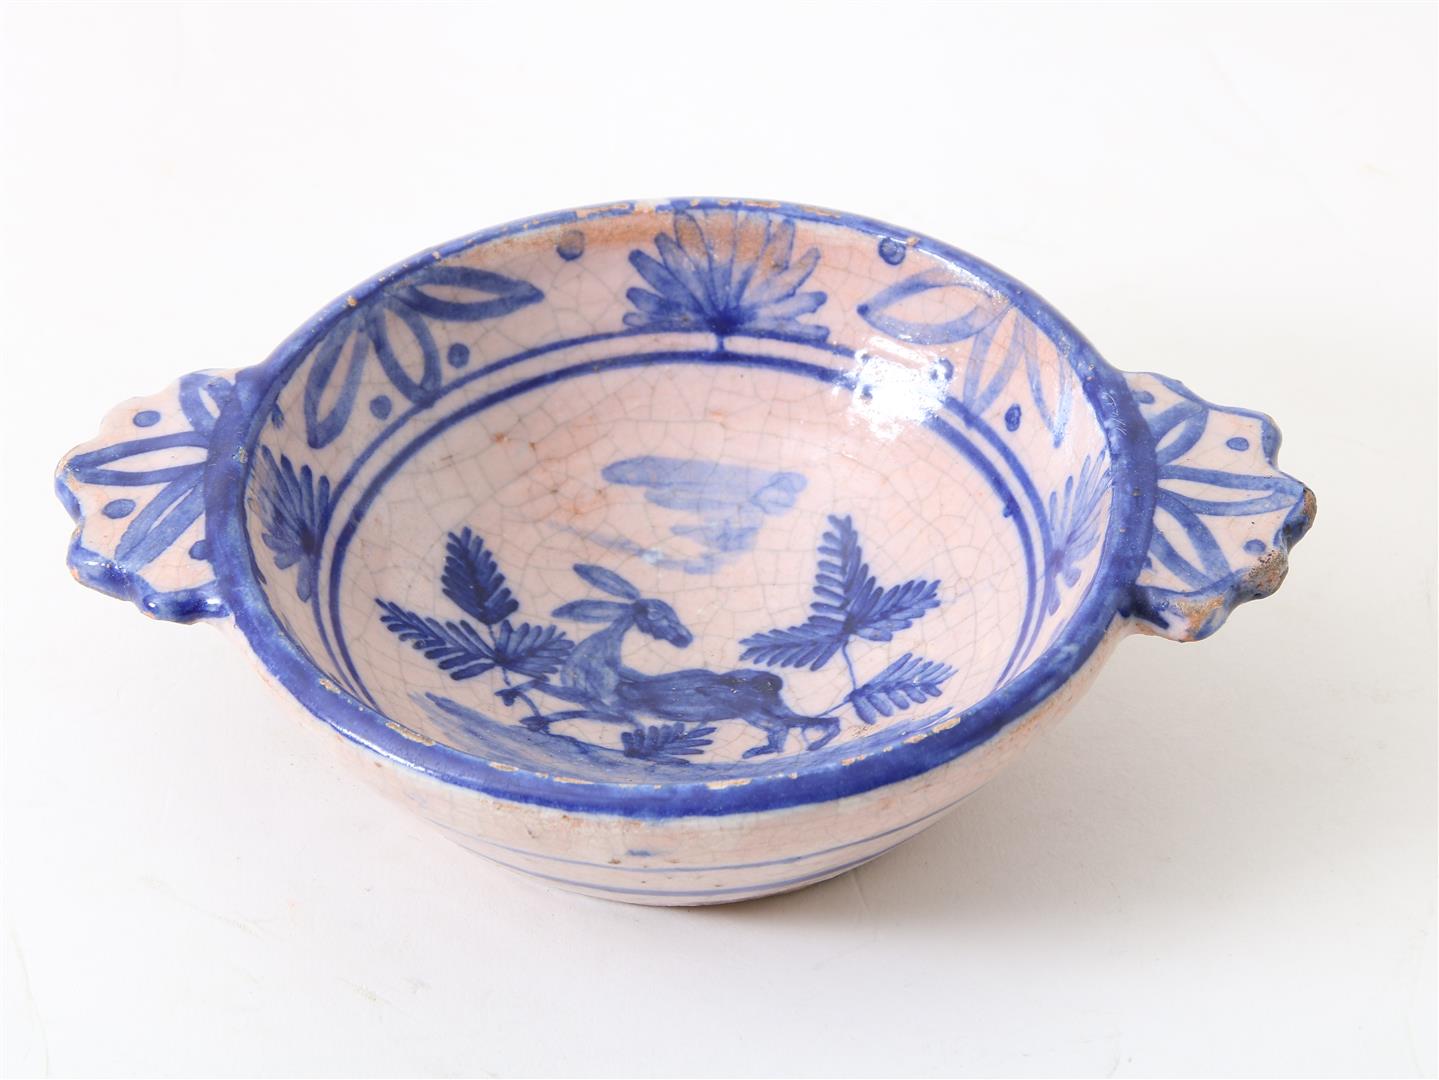 Majolica porridge bowl, Southern Europe, probably 19th century, diameter 13 cm. - Image 2 of 4